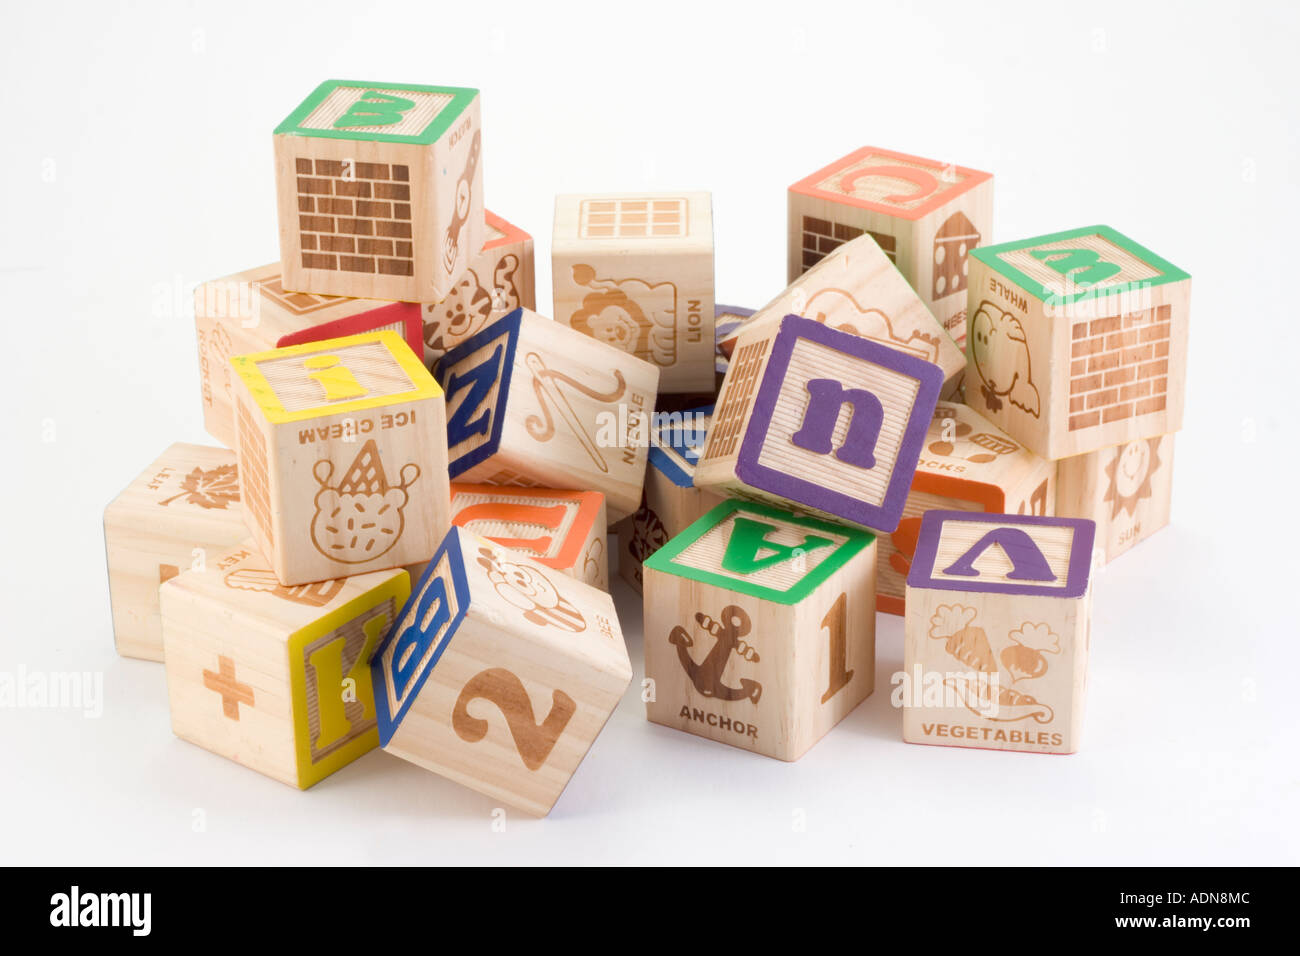 childrens wooden play blocks